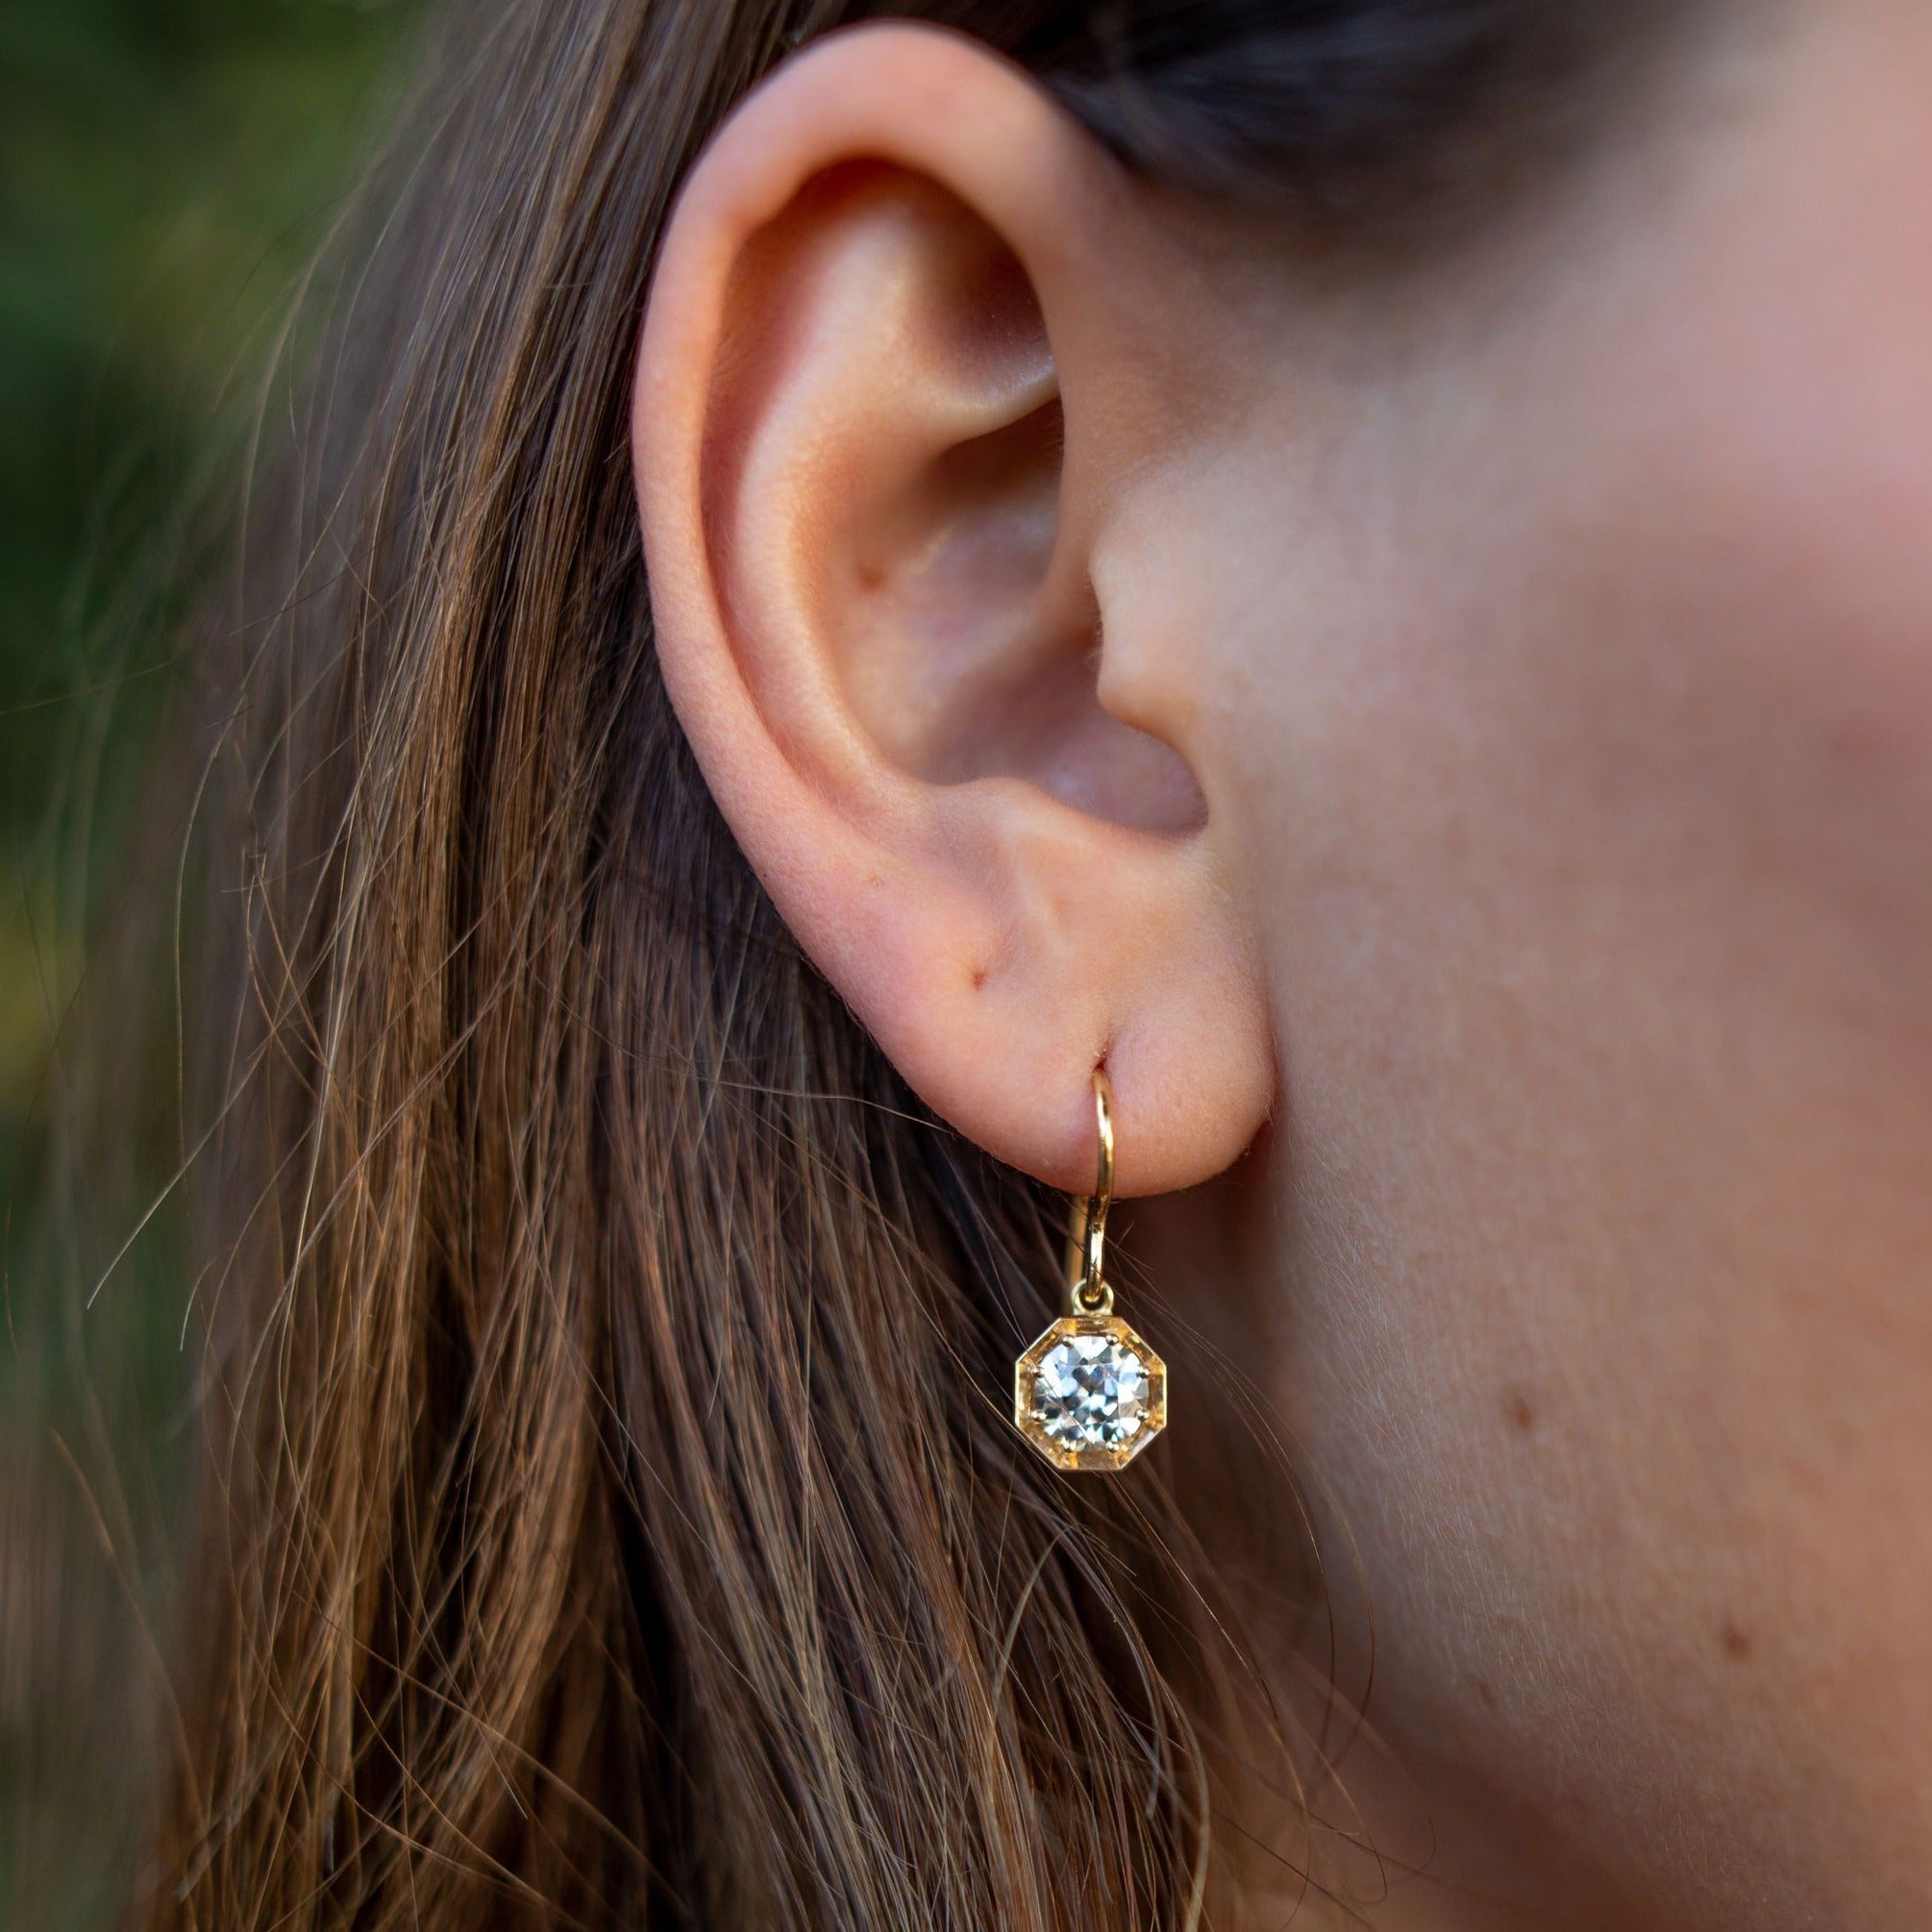 SINGLE STONE GEMMA DROPS | Earrings featuring 1.88ctw K-L/VVS2-SI1 GIA certified old Europeancut diamonds prong set in handcrafted 18K yellow gold drop earrings.